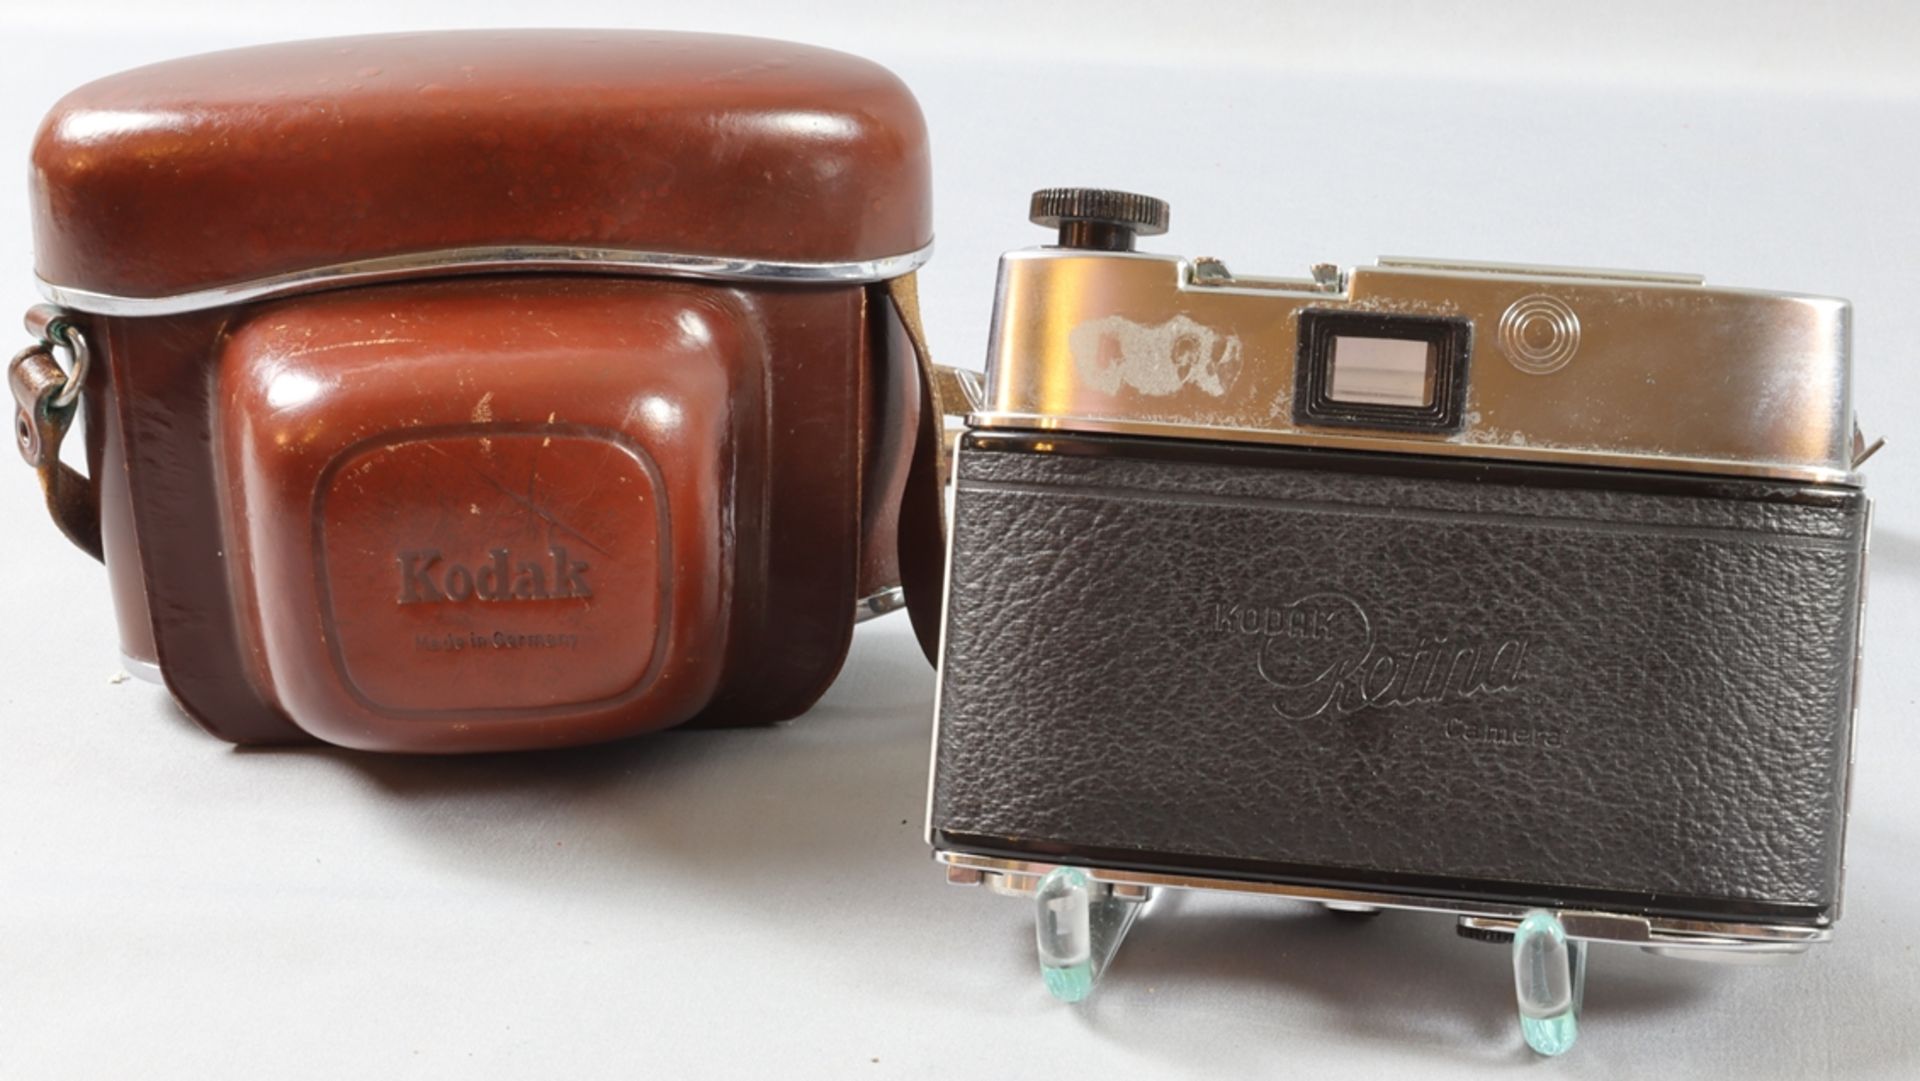 Kodak camera Retina 1F, 60s of the 20th century, German - Image 2 of 4